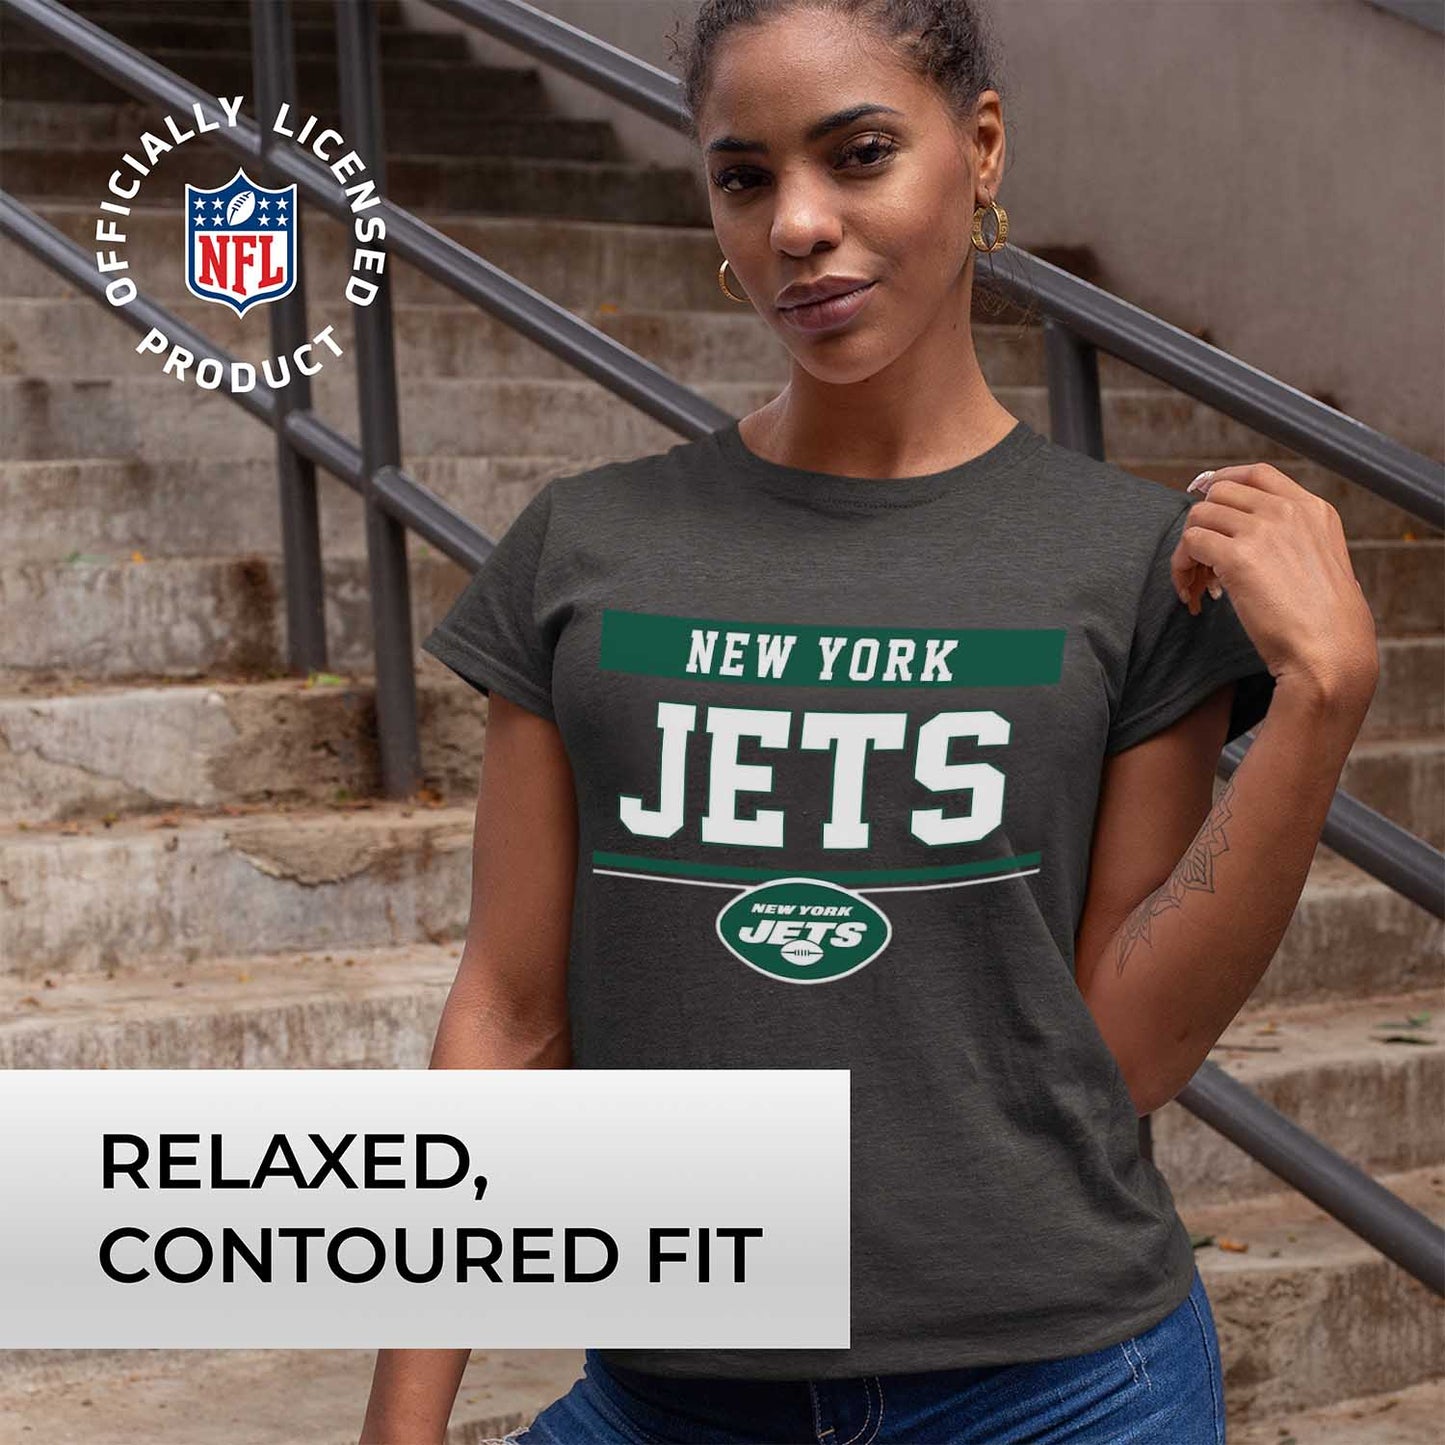 New York Jets NFL Women's Team Block Charcoal Tagless T-Shirt - Charcoal